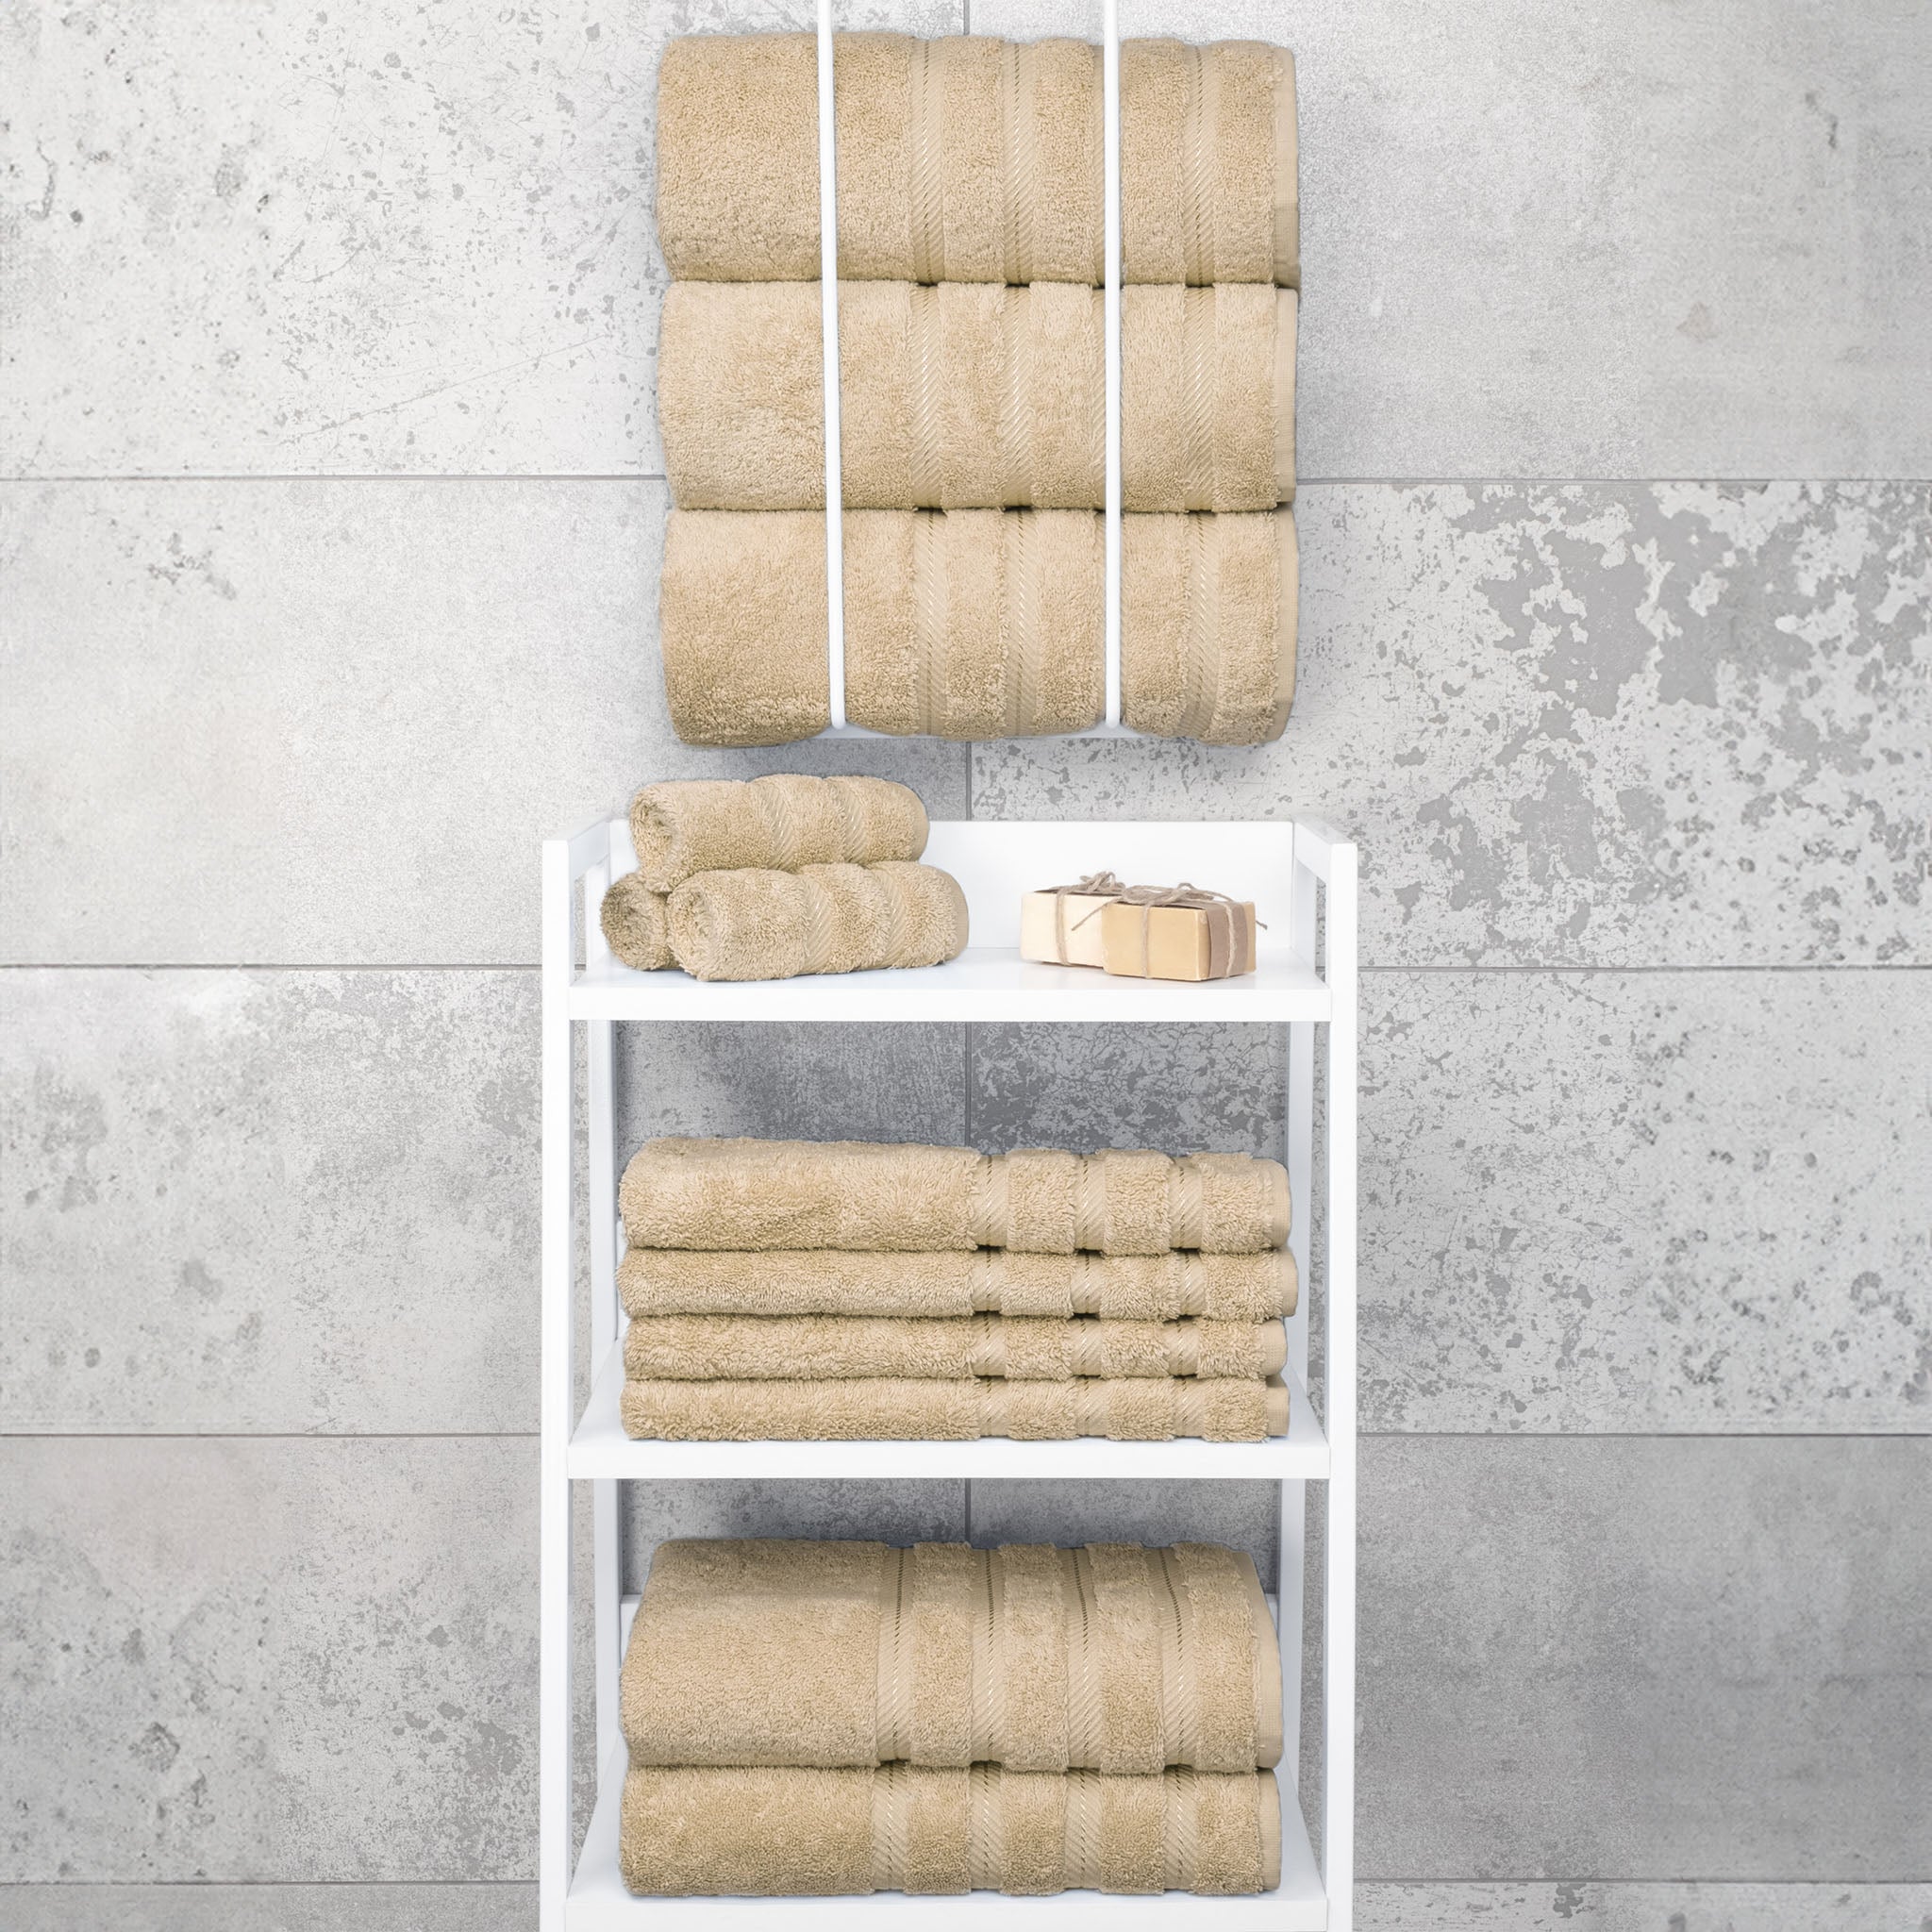 American Soft Linen 100% Turkish Cotton 4 Pack Bath Towel Set sand-taupe-7